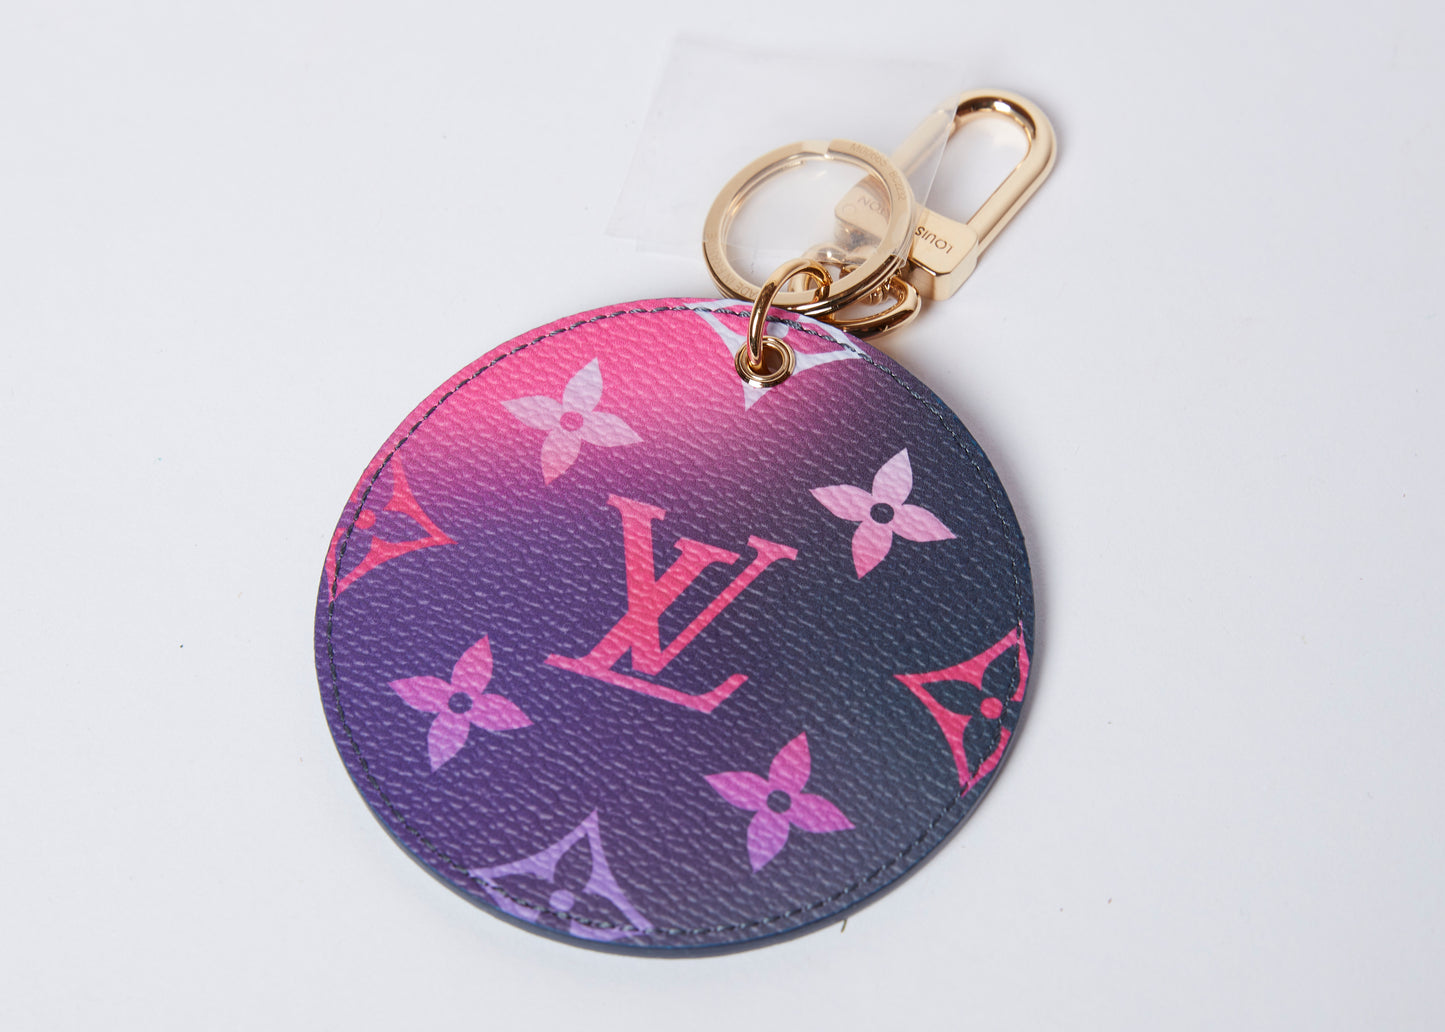 Louis Vuitton Midnight Fuchsia Illustre Bag Charm and Key Holder (New in Box)